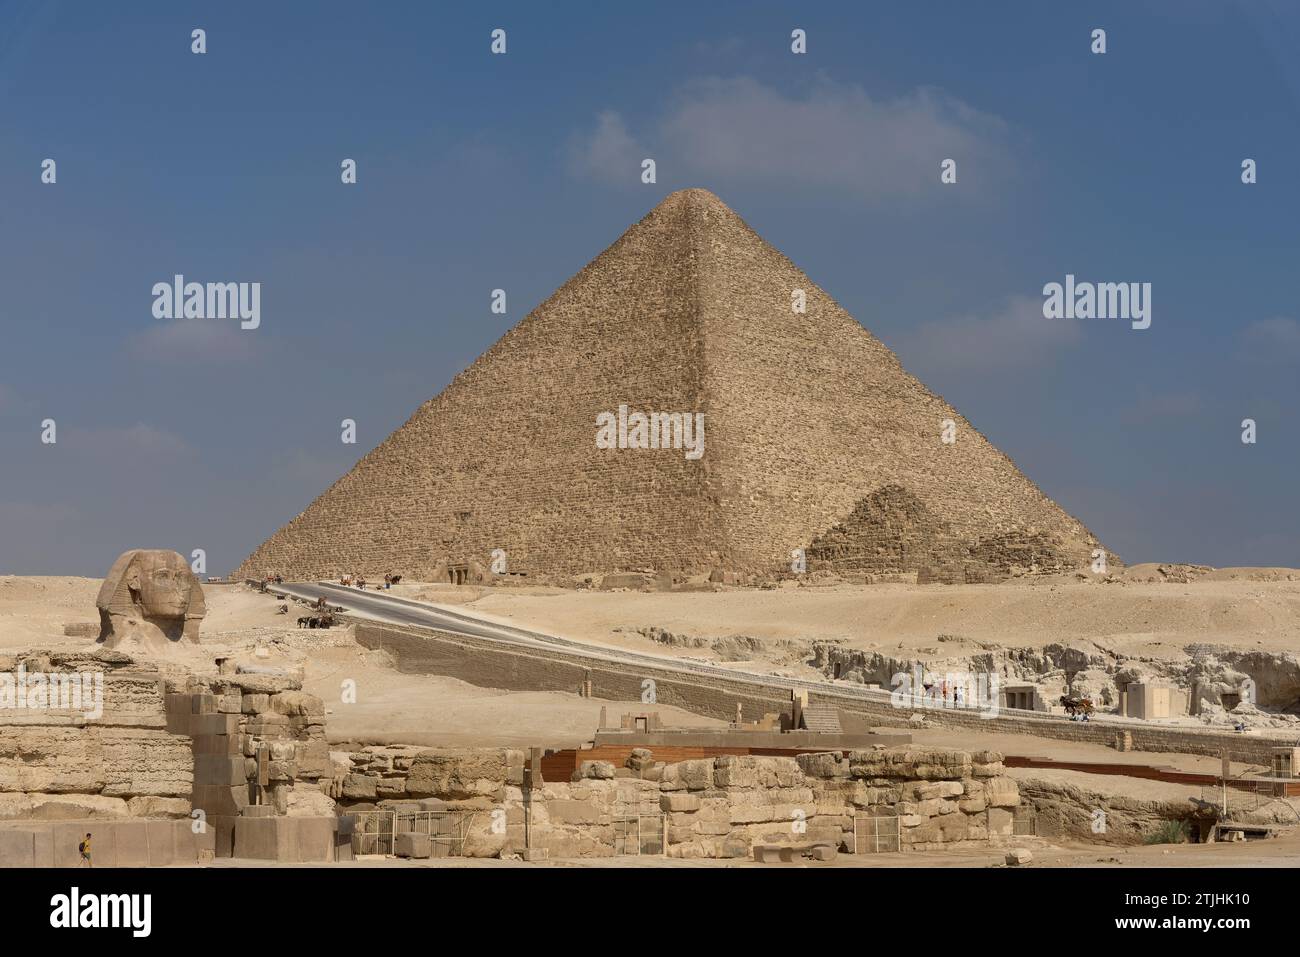 The Great Pyramid of Giza. Nazlat as Sammān, Giza, Egypt. The Great ...